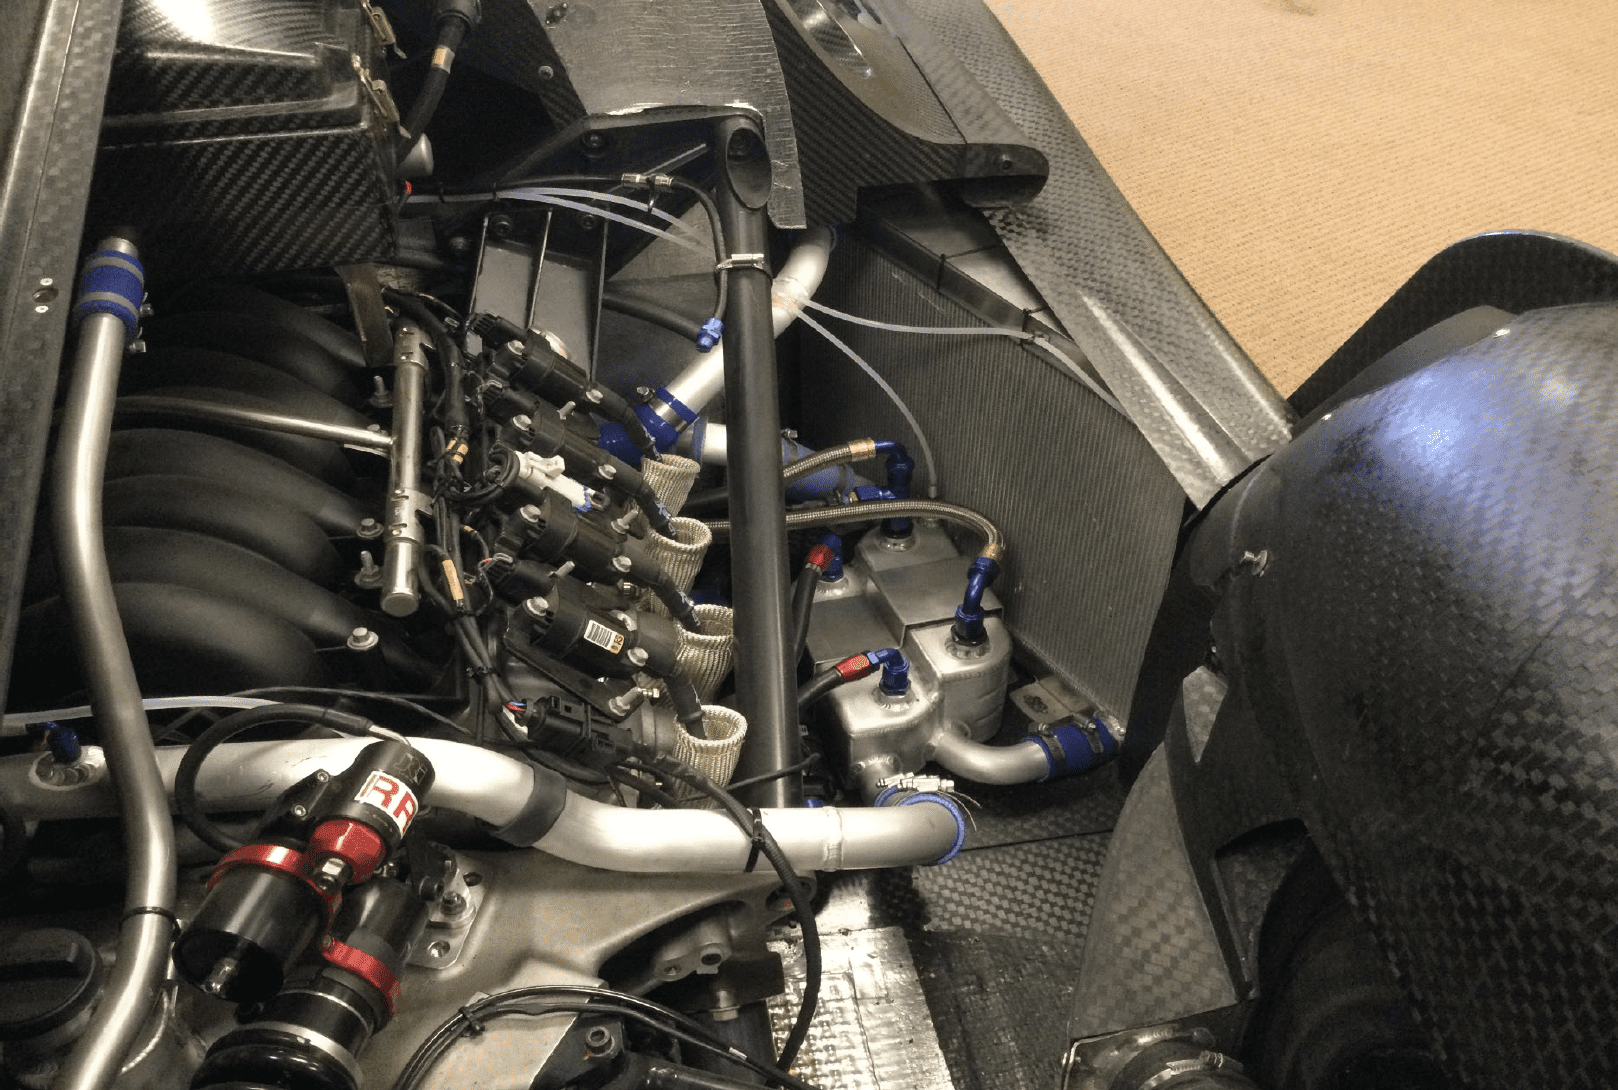 2019 Porsche GT3 - Ligier LMP4-V8 - Used - Sebring, FL 33100, United States